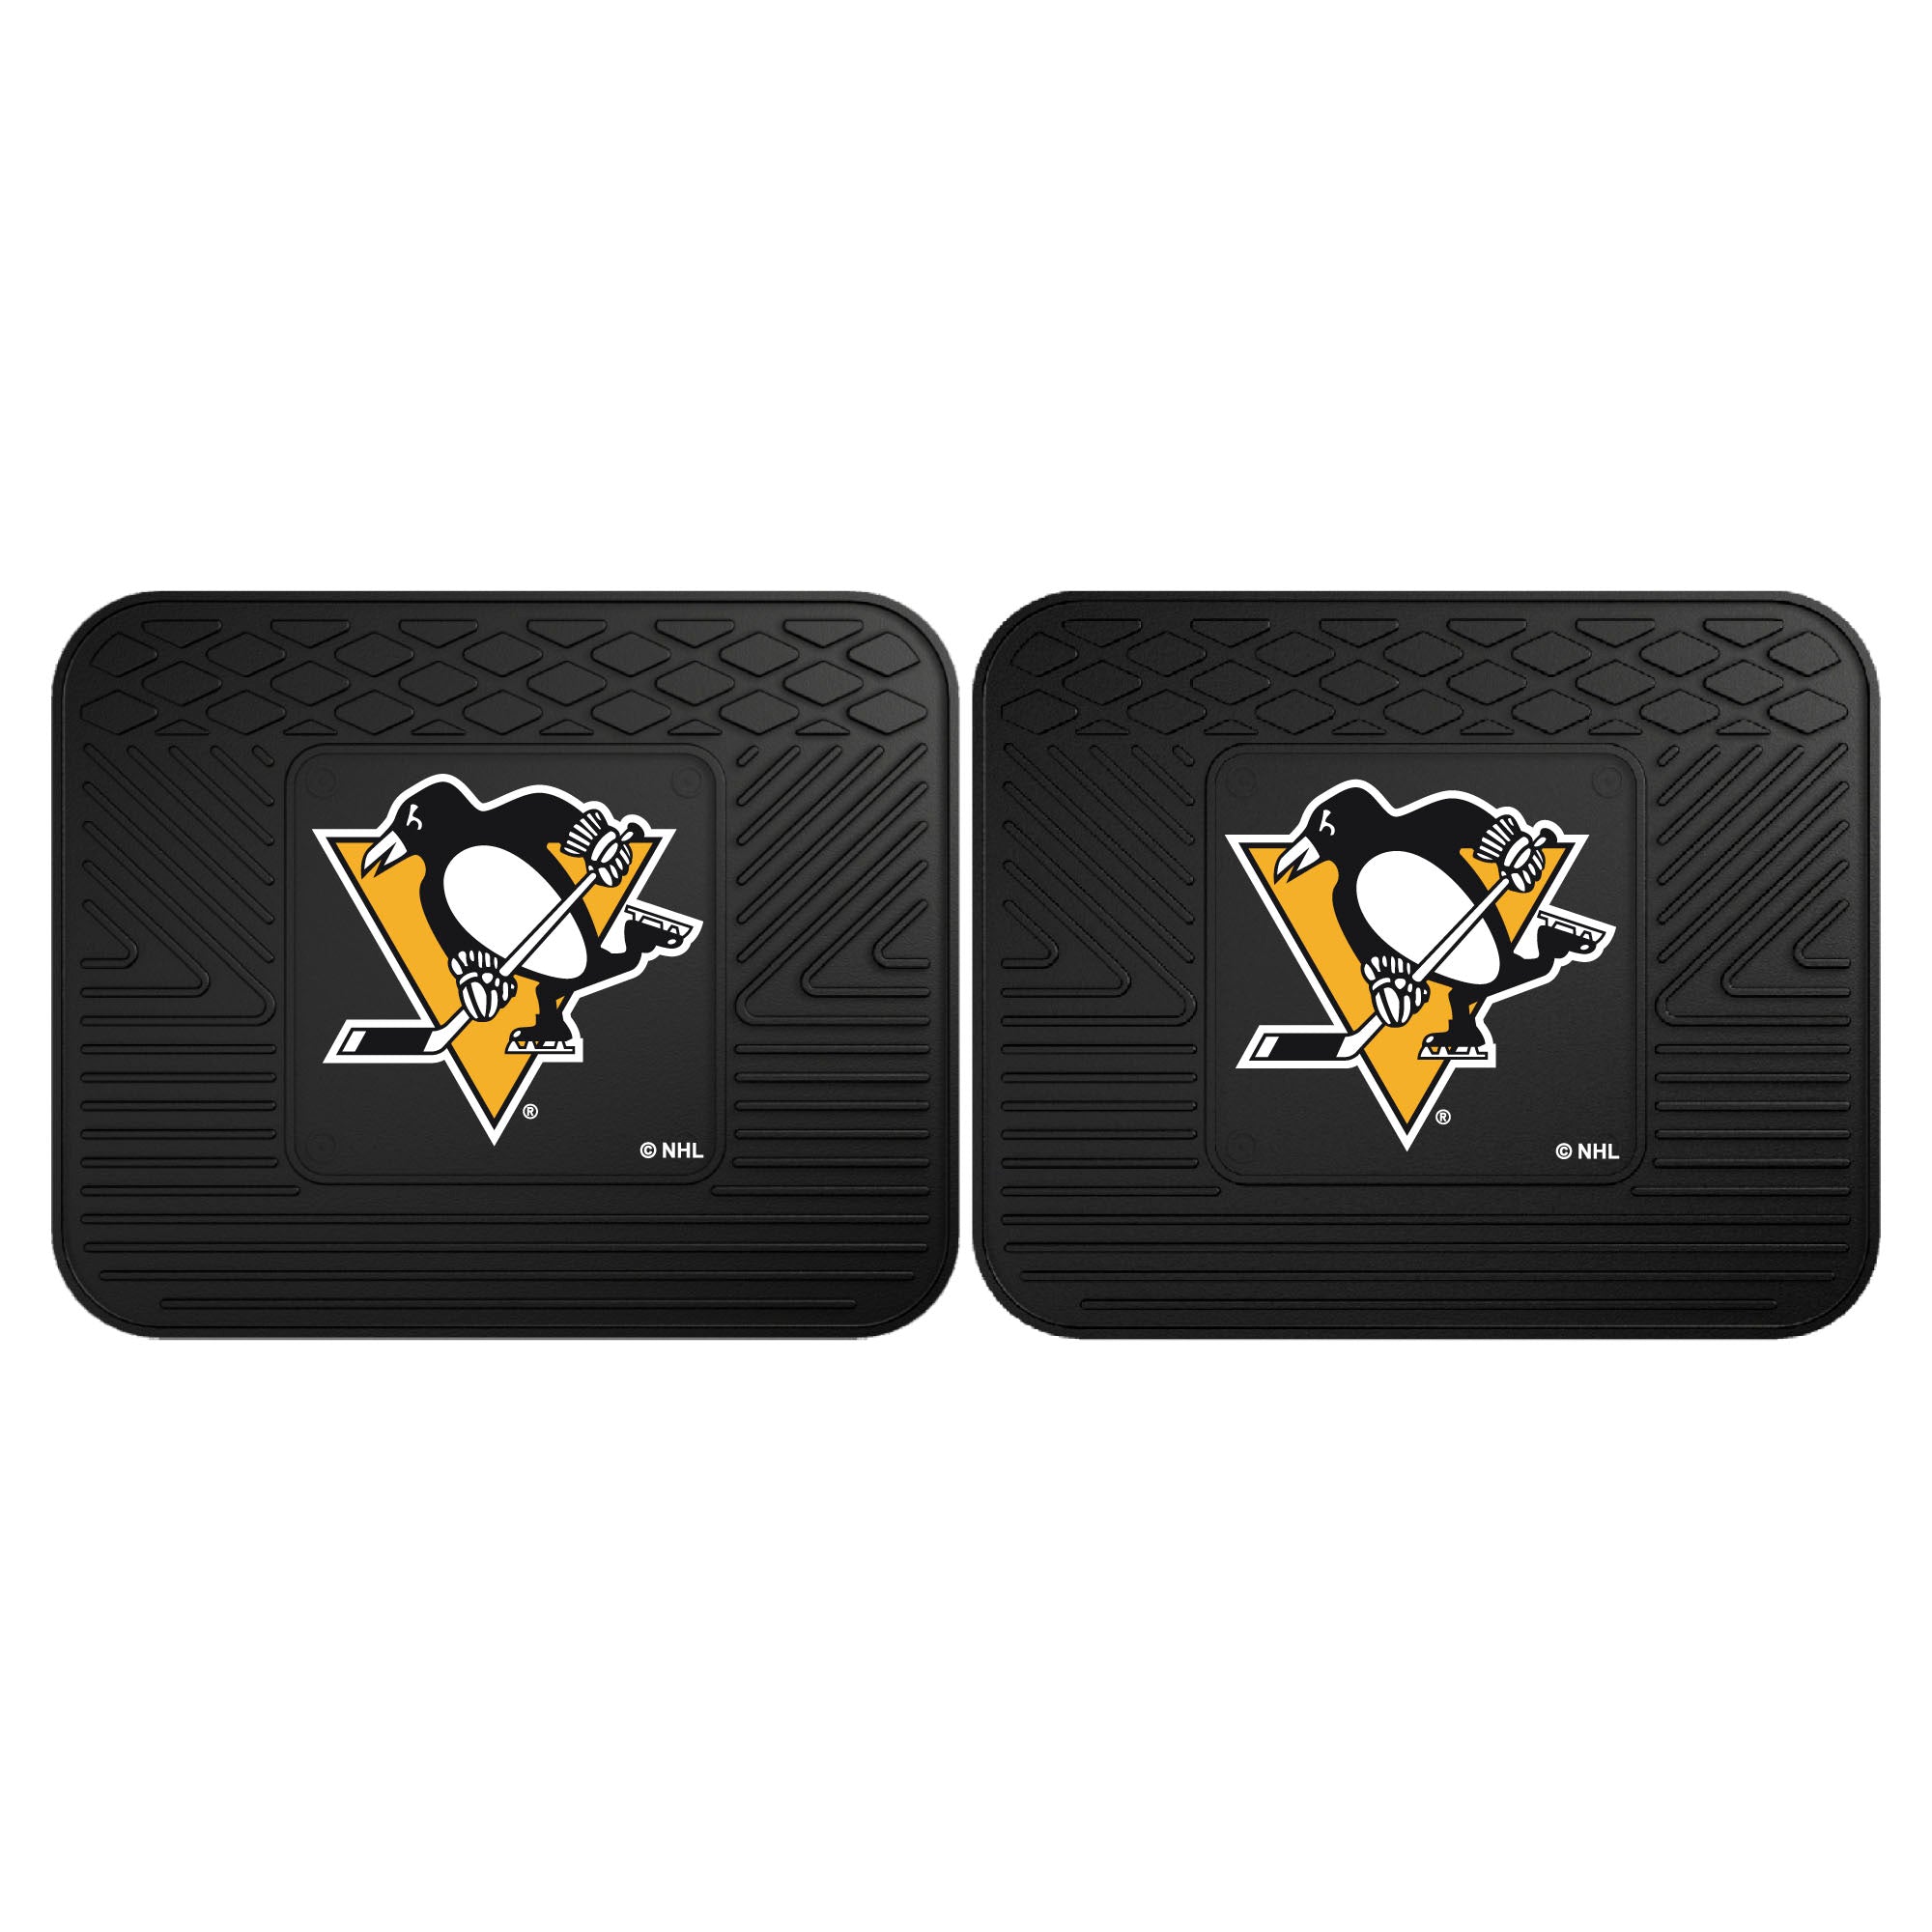 NHL - Pittsburgh Penguins 2 Utility Mats